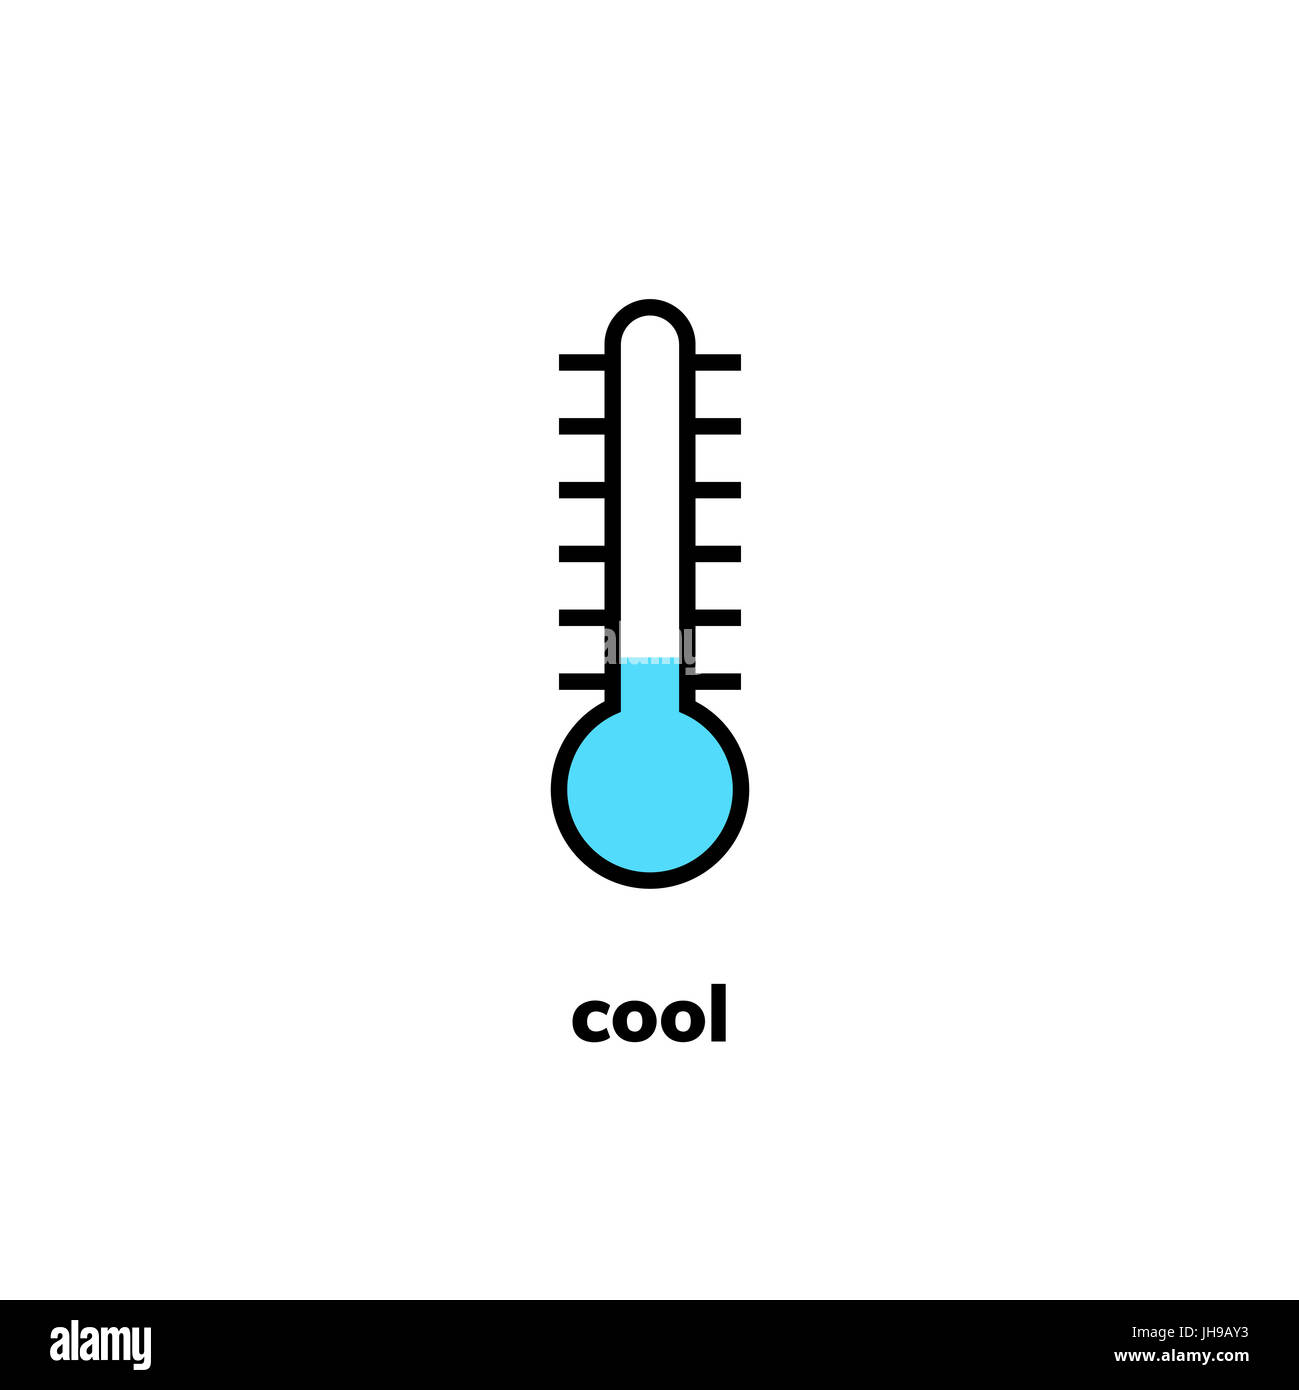 https://c8.alamy.com/comp/JH9AY3/temperature-icon-clip-art-narrow-range-mercury-thermometer-shows-cool-JH9AY3.jpg